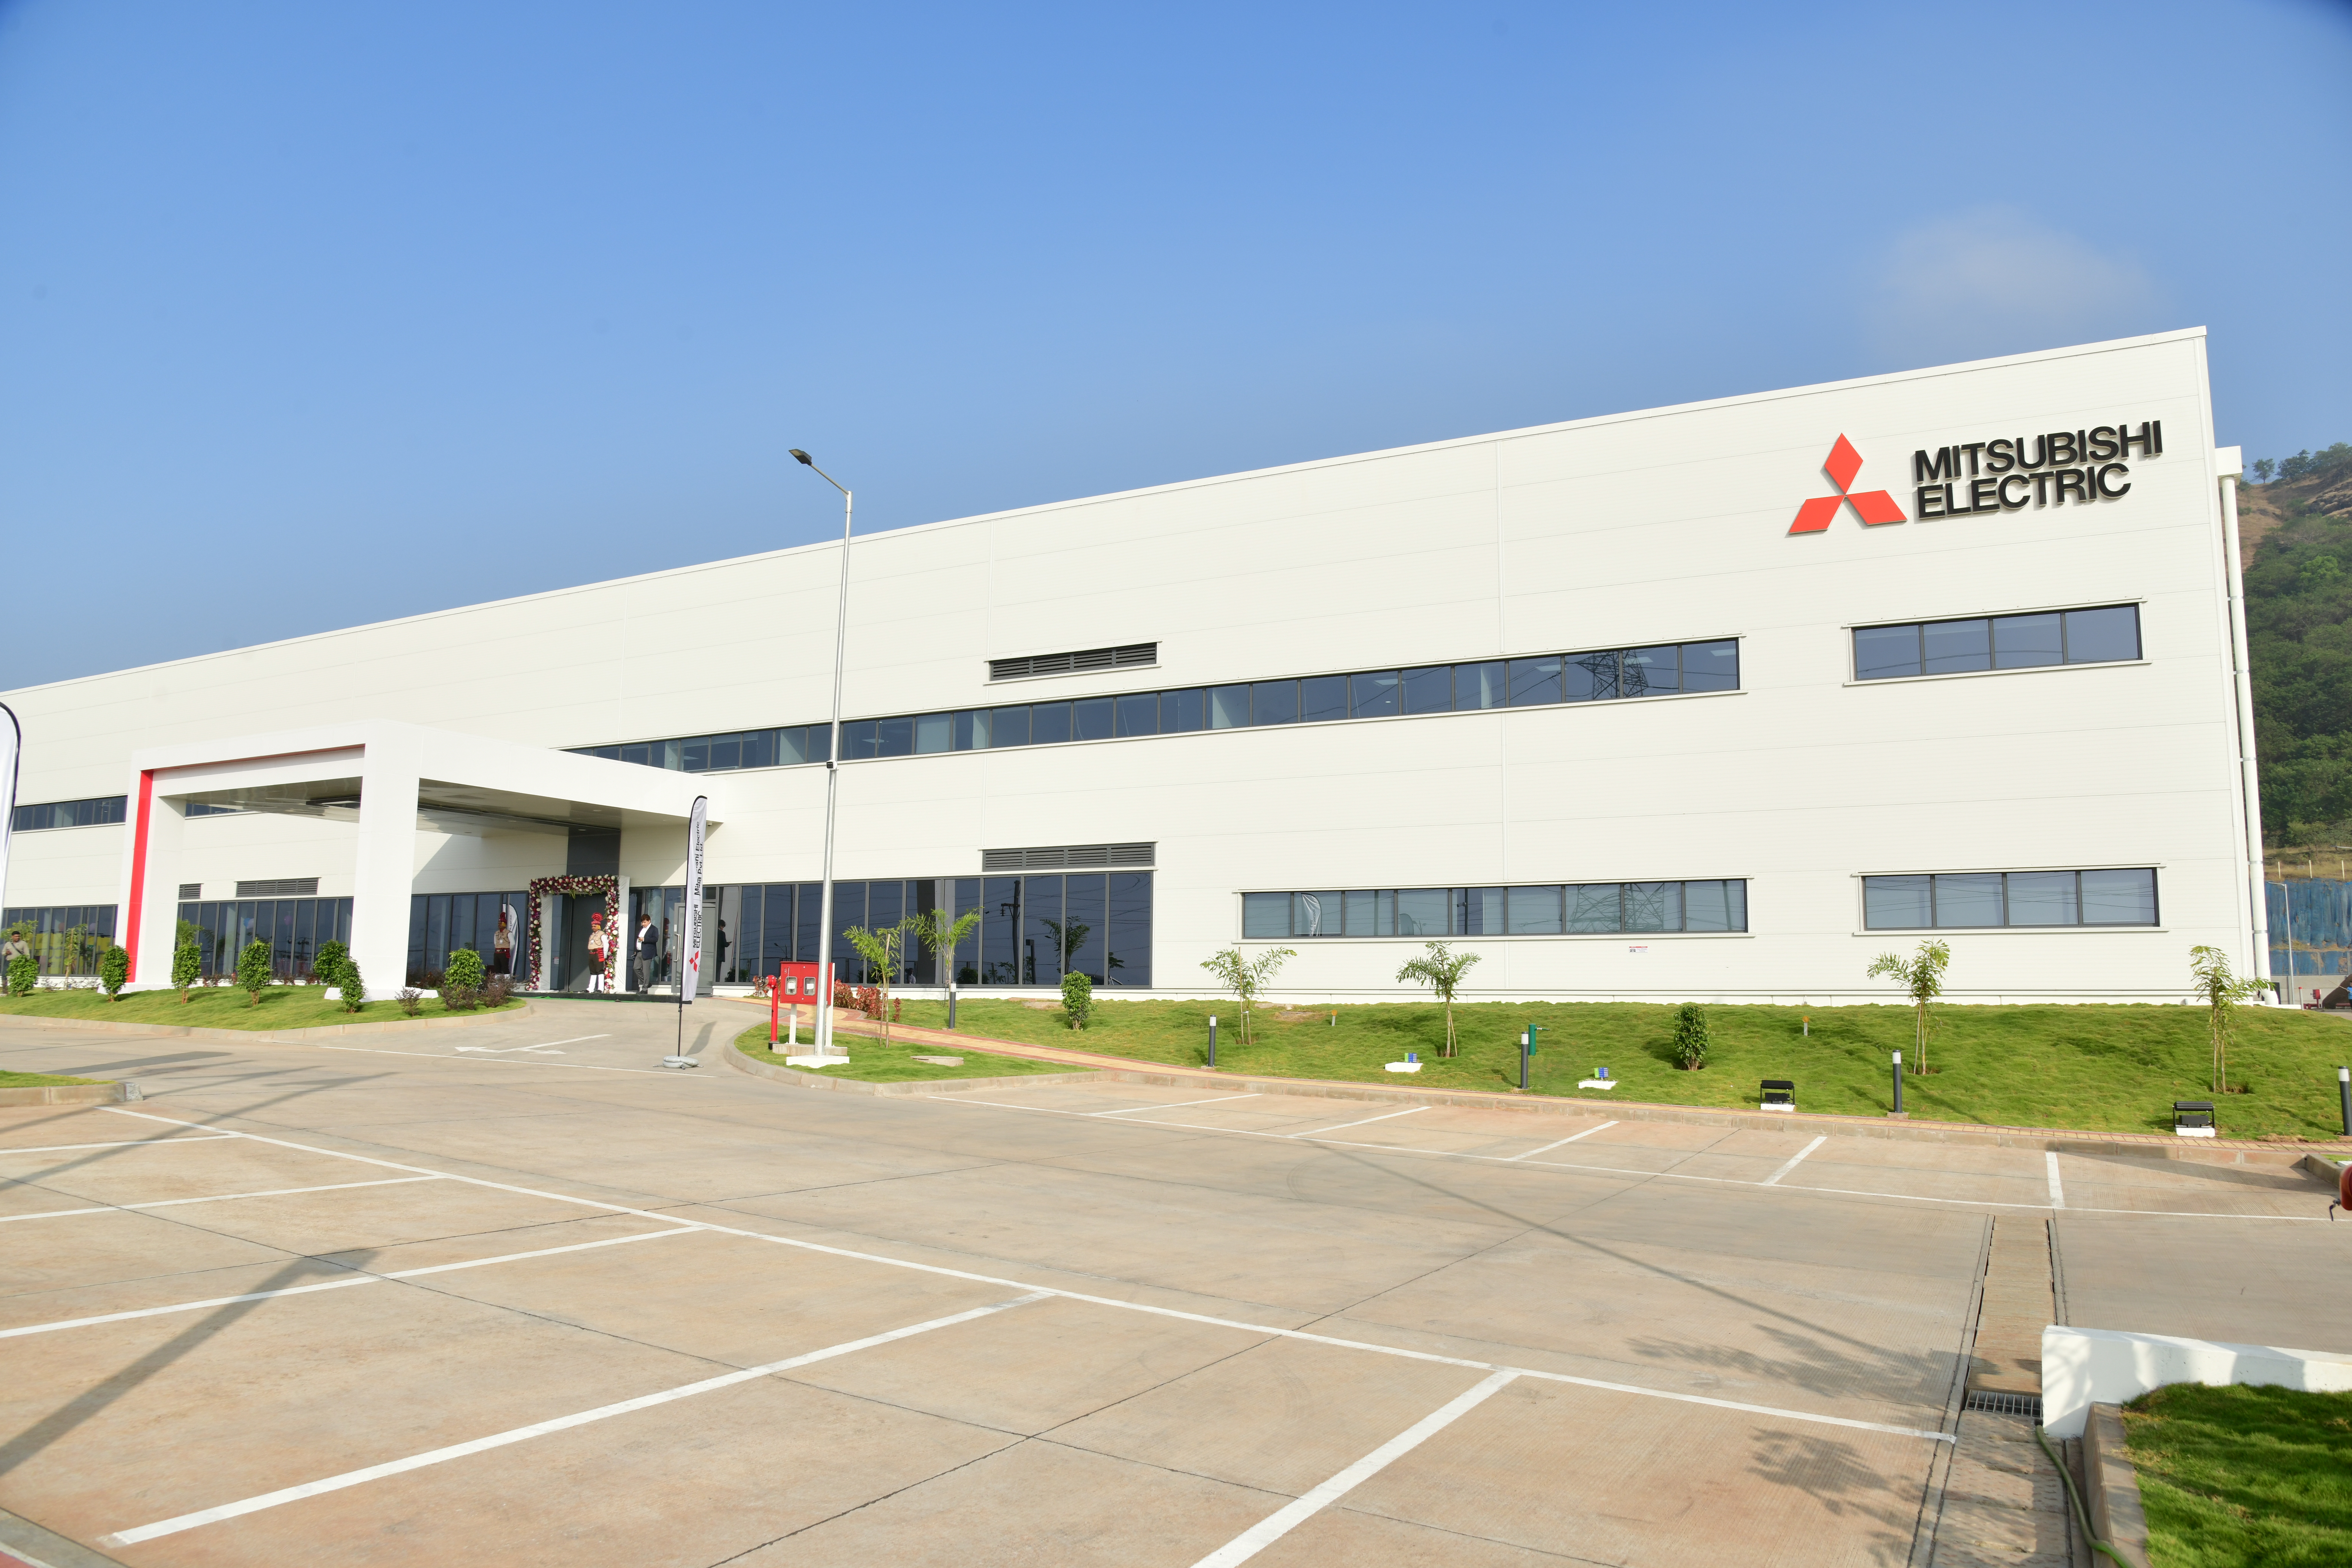 Mitsubishi Electric Inaugurates New Cutting-Edge Factory Automation Systems Manufacturing Plant in Maharashtra, India